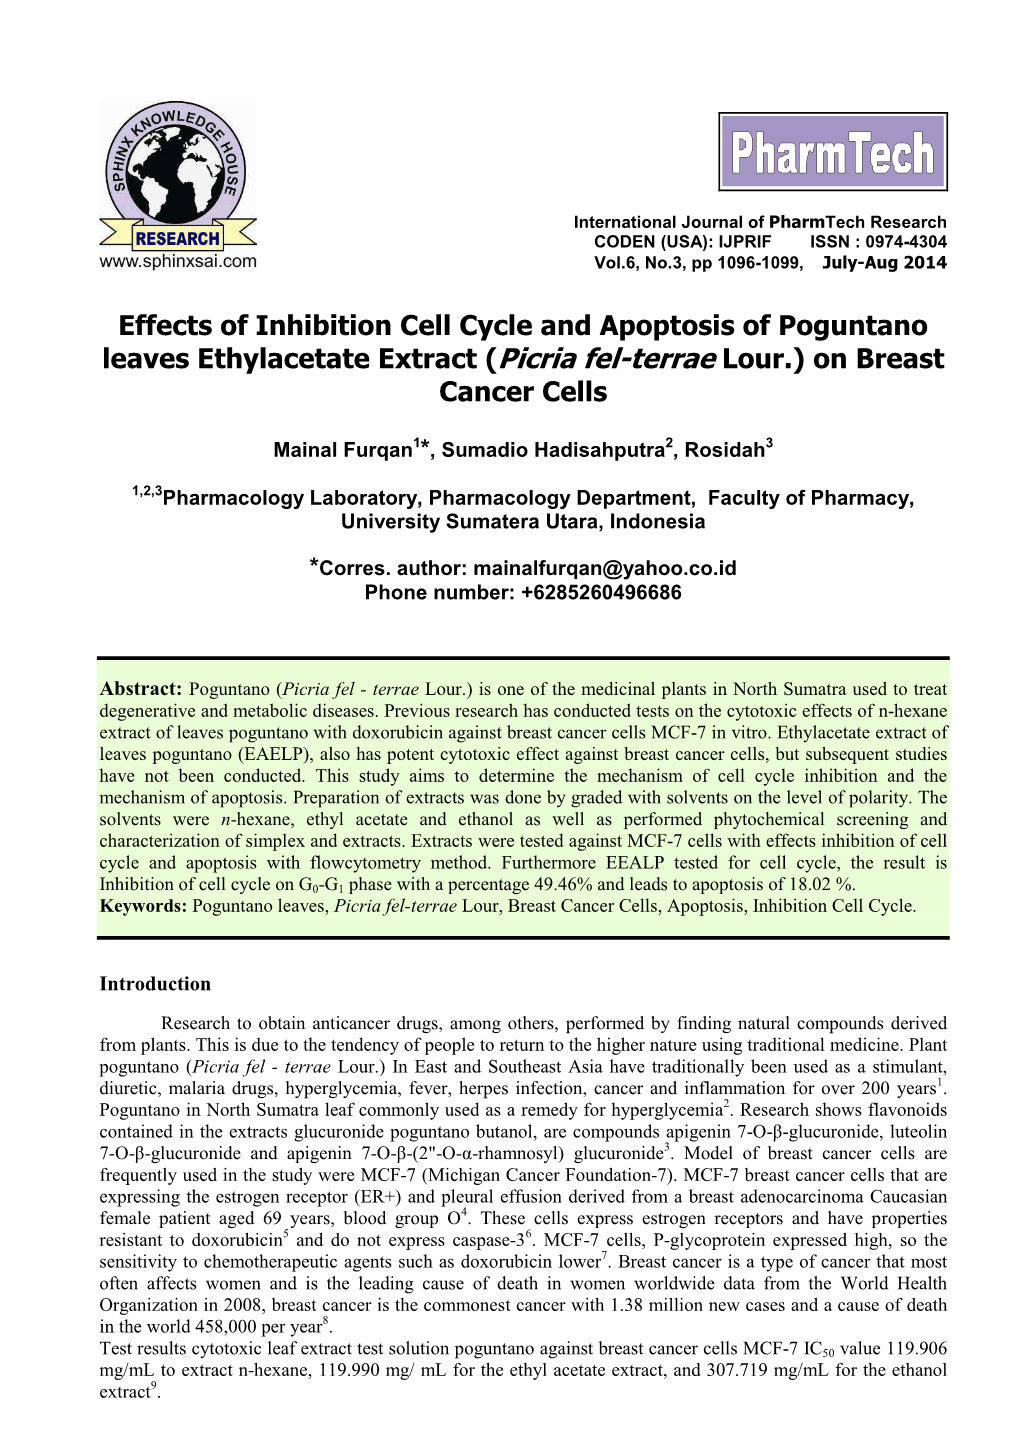 (Picria Fel-Terrae Lour.) on Breast Cancer Cells